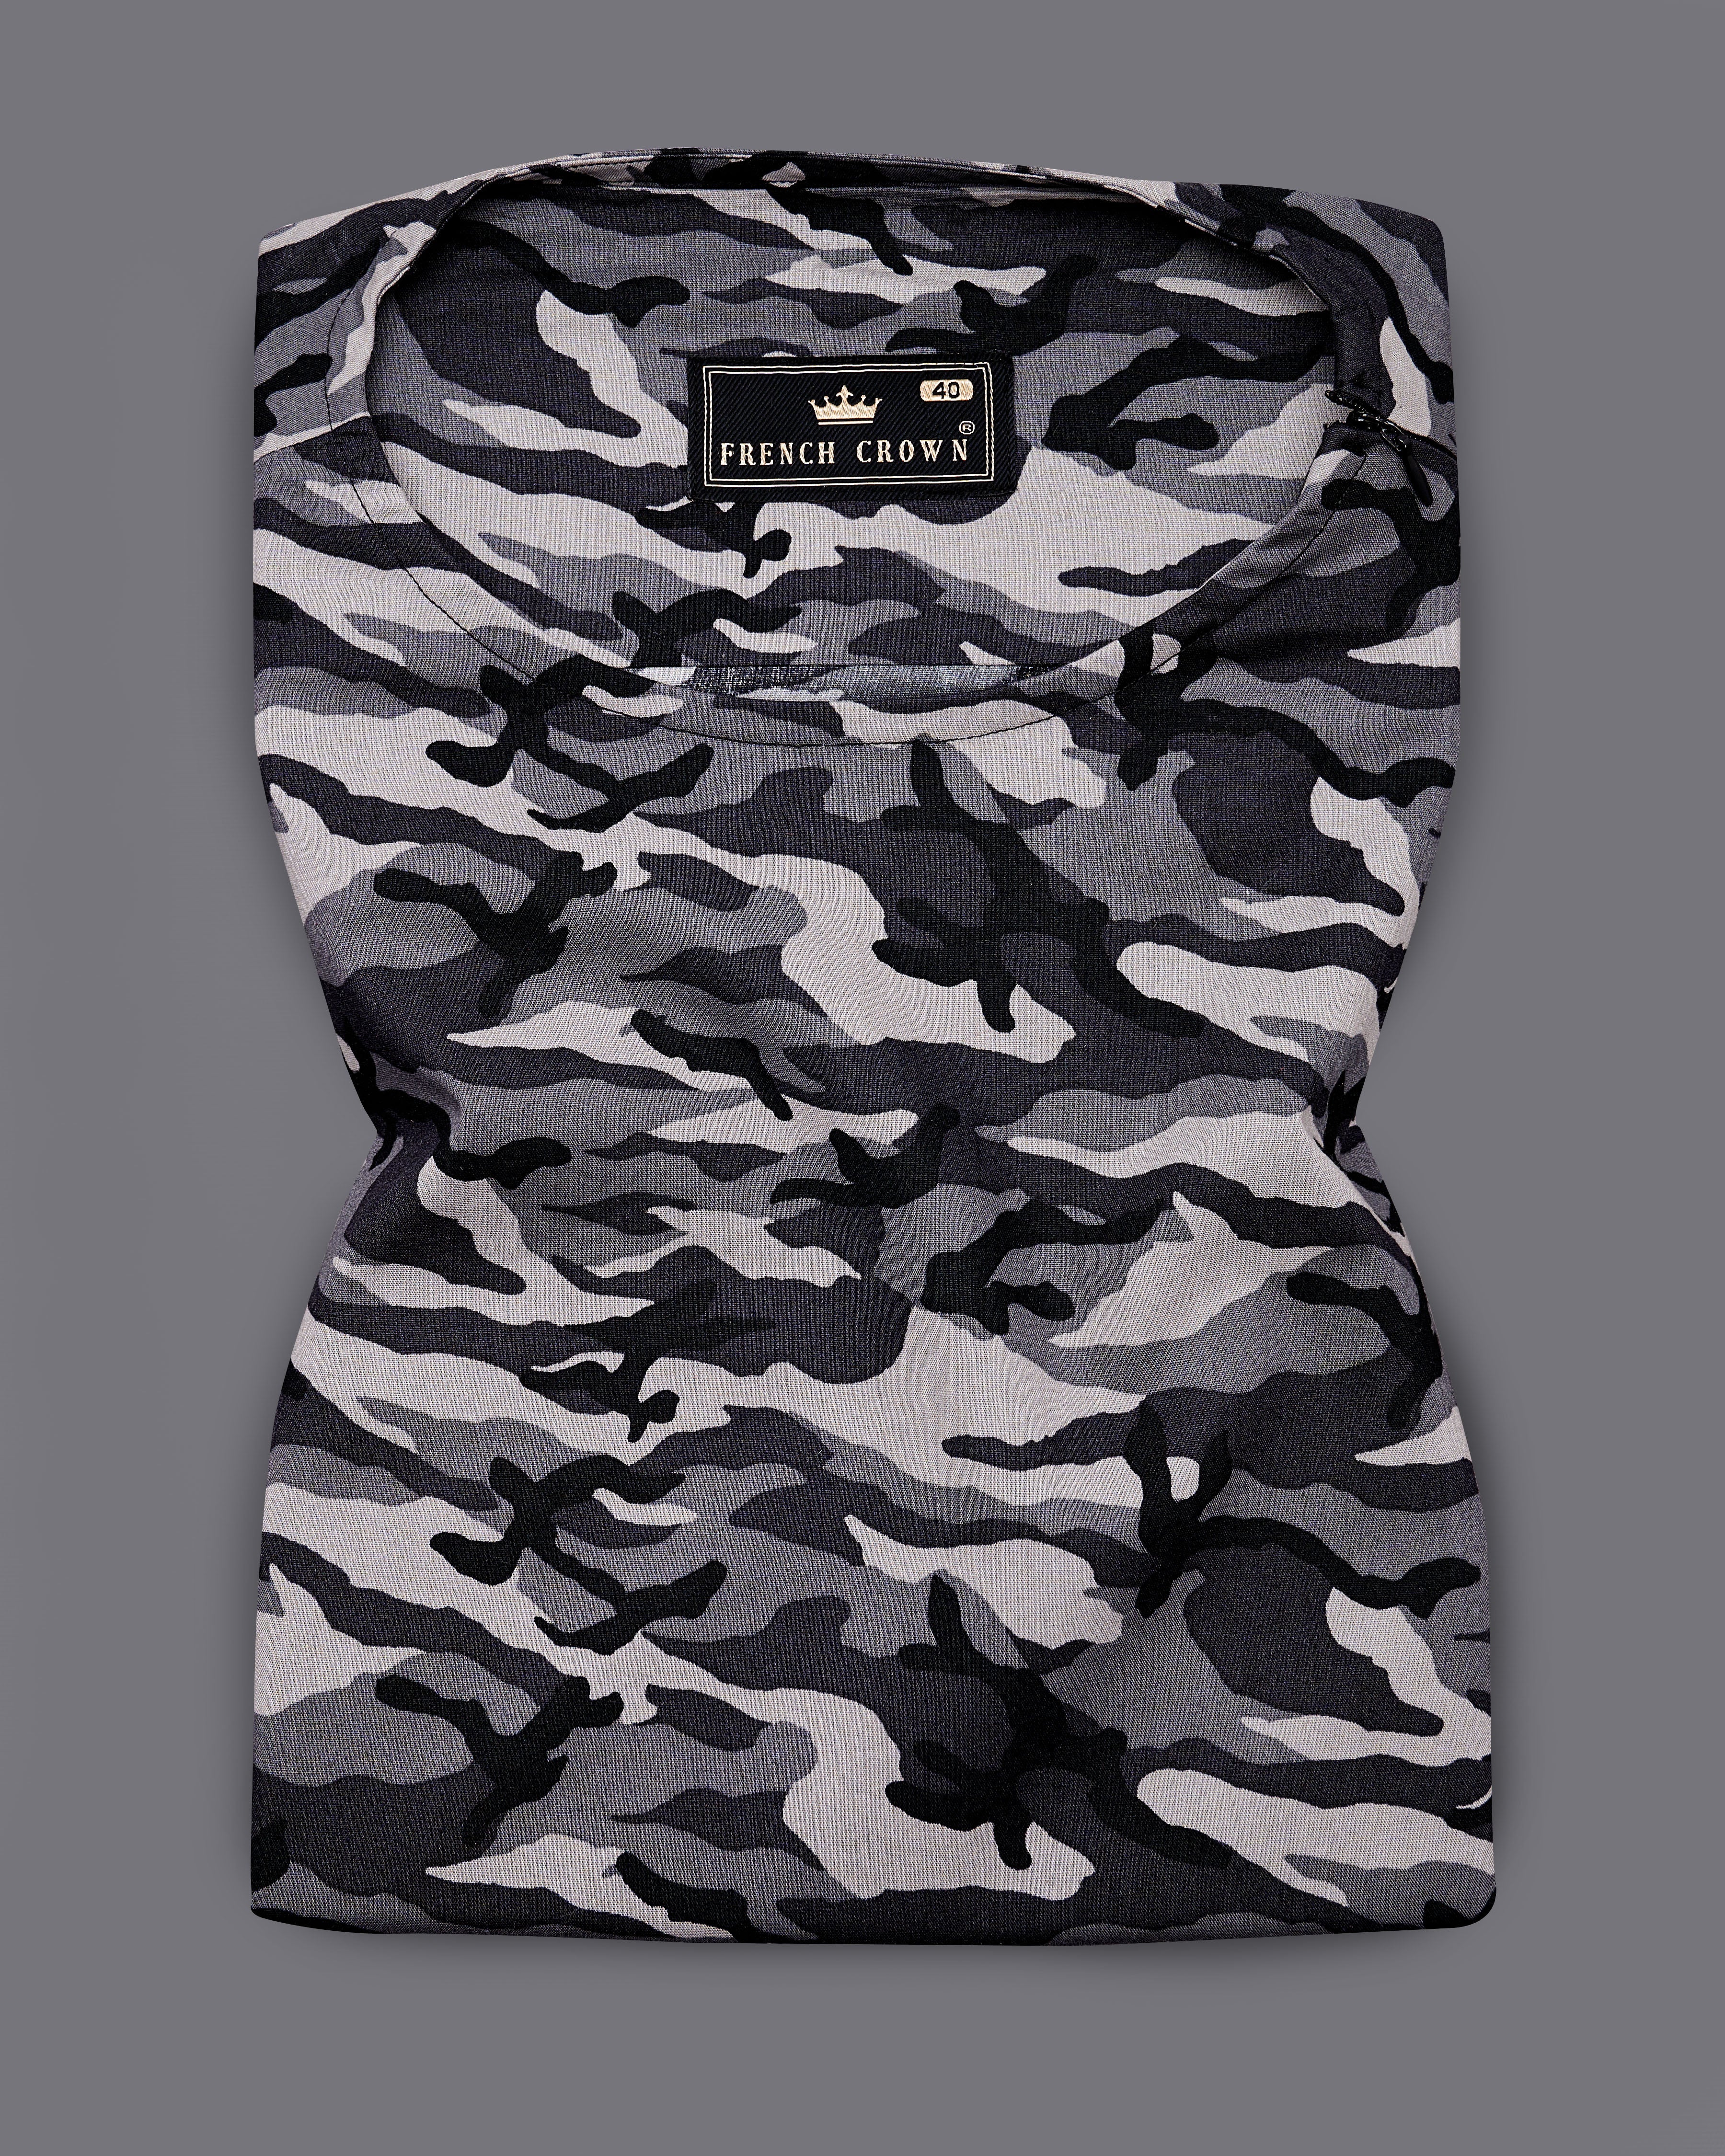 Half Camouflage Printed and Half-Black Royal Oxford Designer Bush Shirt 8912-WOC-P339-38, 8912-WOC-P339-H-38,  8912-WOC-P339-39,  8912-WOC-P339-H-39,  8912-WOC-P339-40,  8912-WOC-P339-H-40,  8912-WOC-P339-42,  8912-WOC-P339-H-42,  8912-WOC-P339-44,  8912-WOC-P339-H-44,  8912-WOC-P339-46,  8912-WOC-P339-H-46,  8912-WOC-P339-48,  8912-WOC-P339-H-48,  8912-WOC-P339-50,  8912-WOC-P339-H-50,  8912-WOC-P339-52,  8912-WOC-P339-H-52